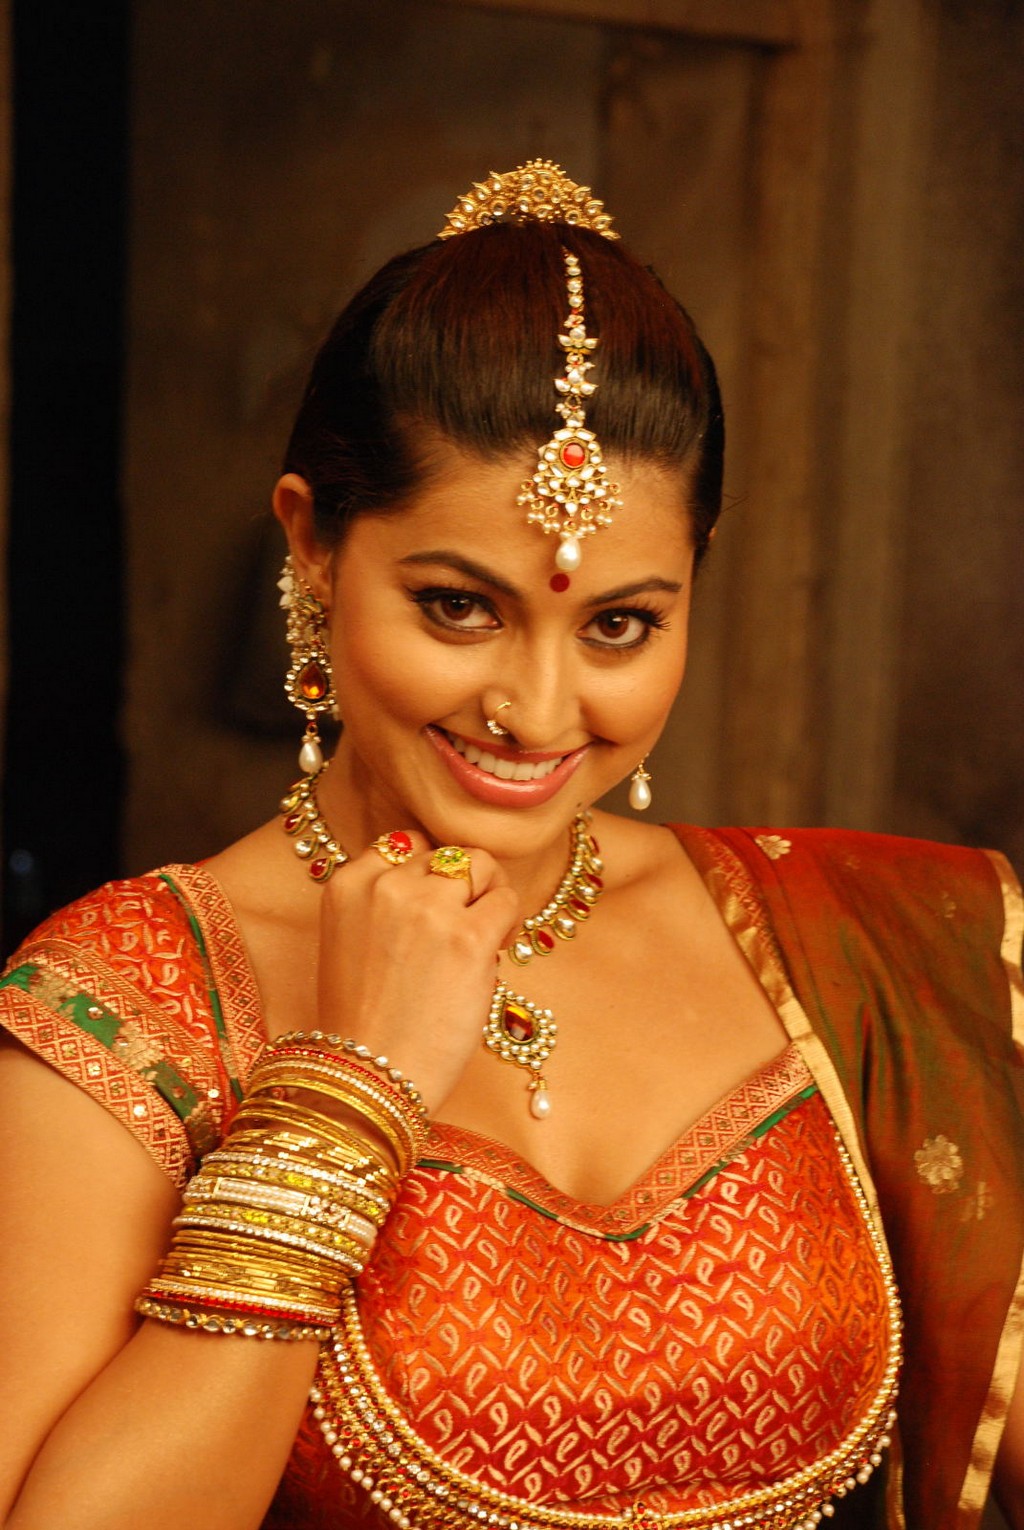 Tamil Actors Unseen Photoshoot Stills: Actress Sneha Hot Photoshoot